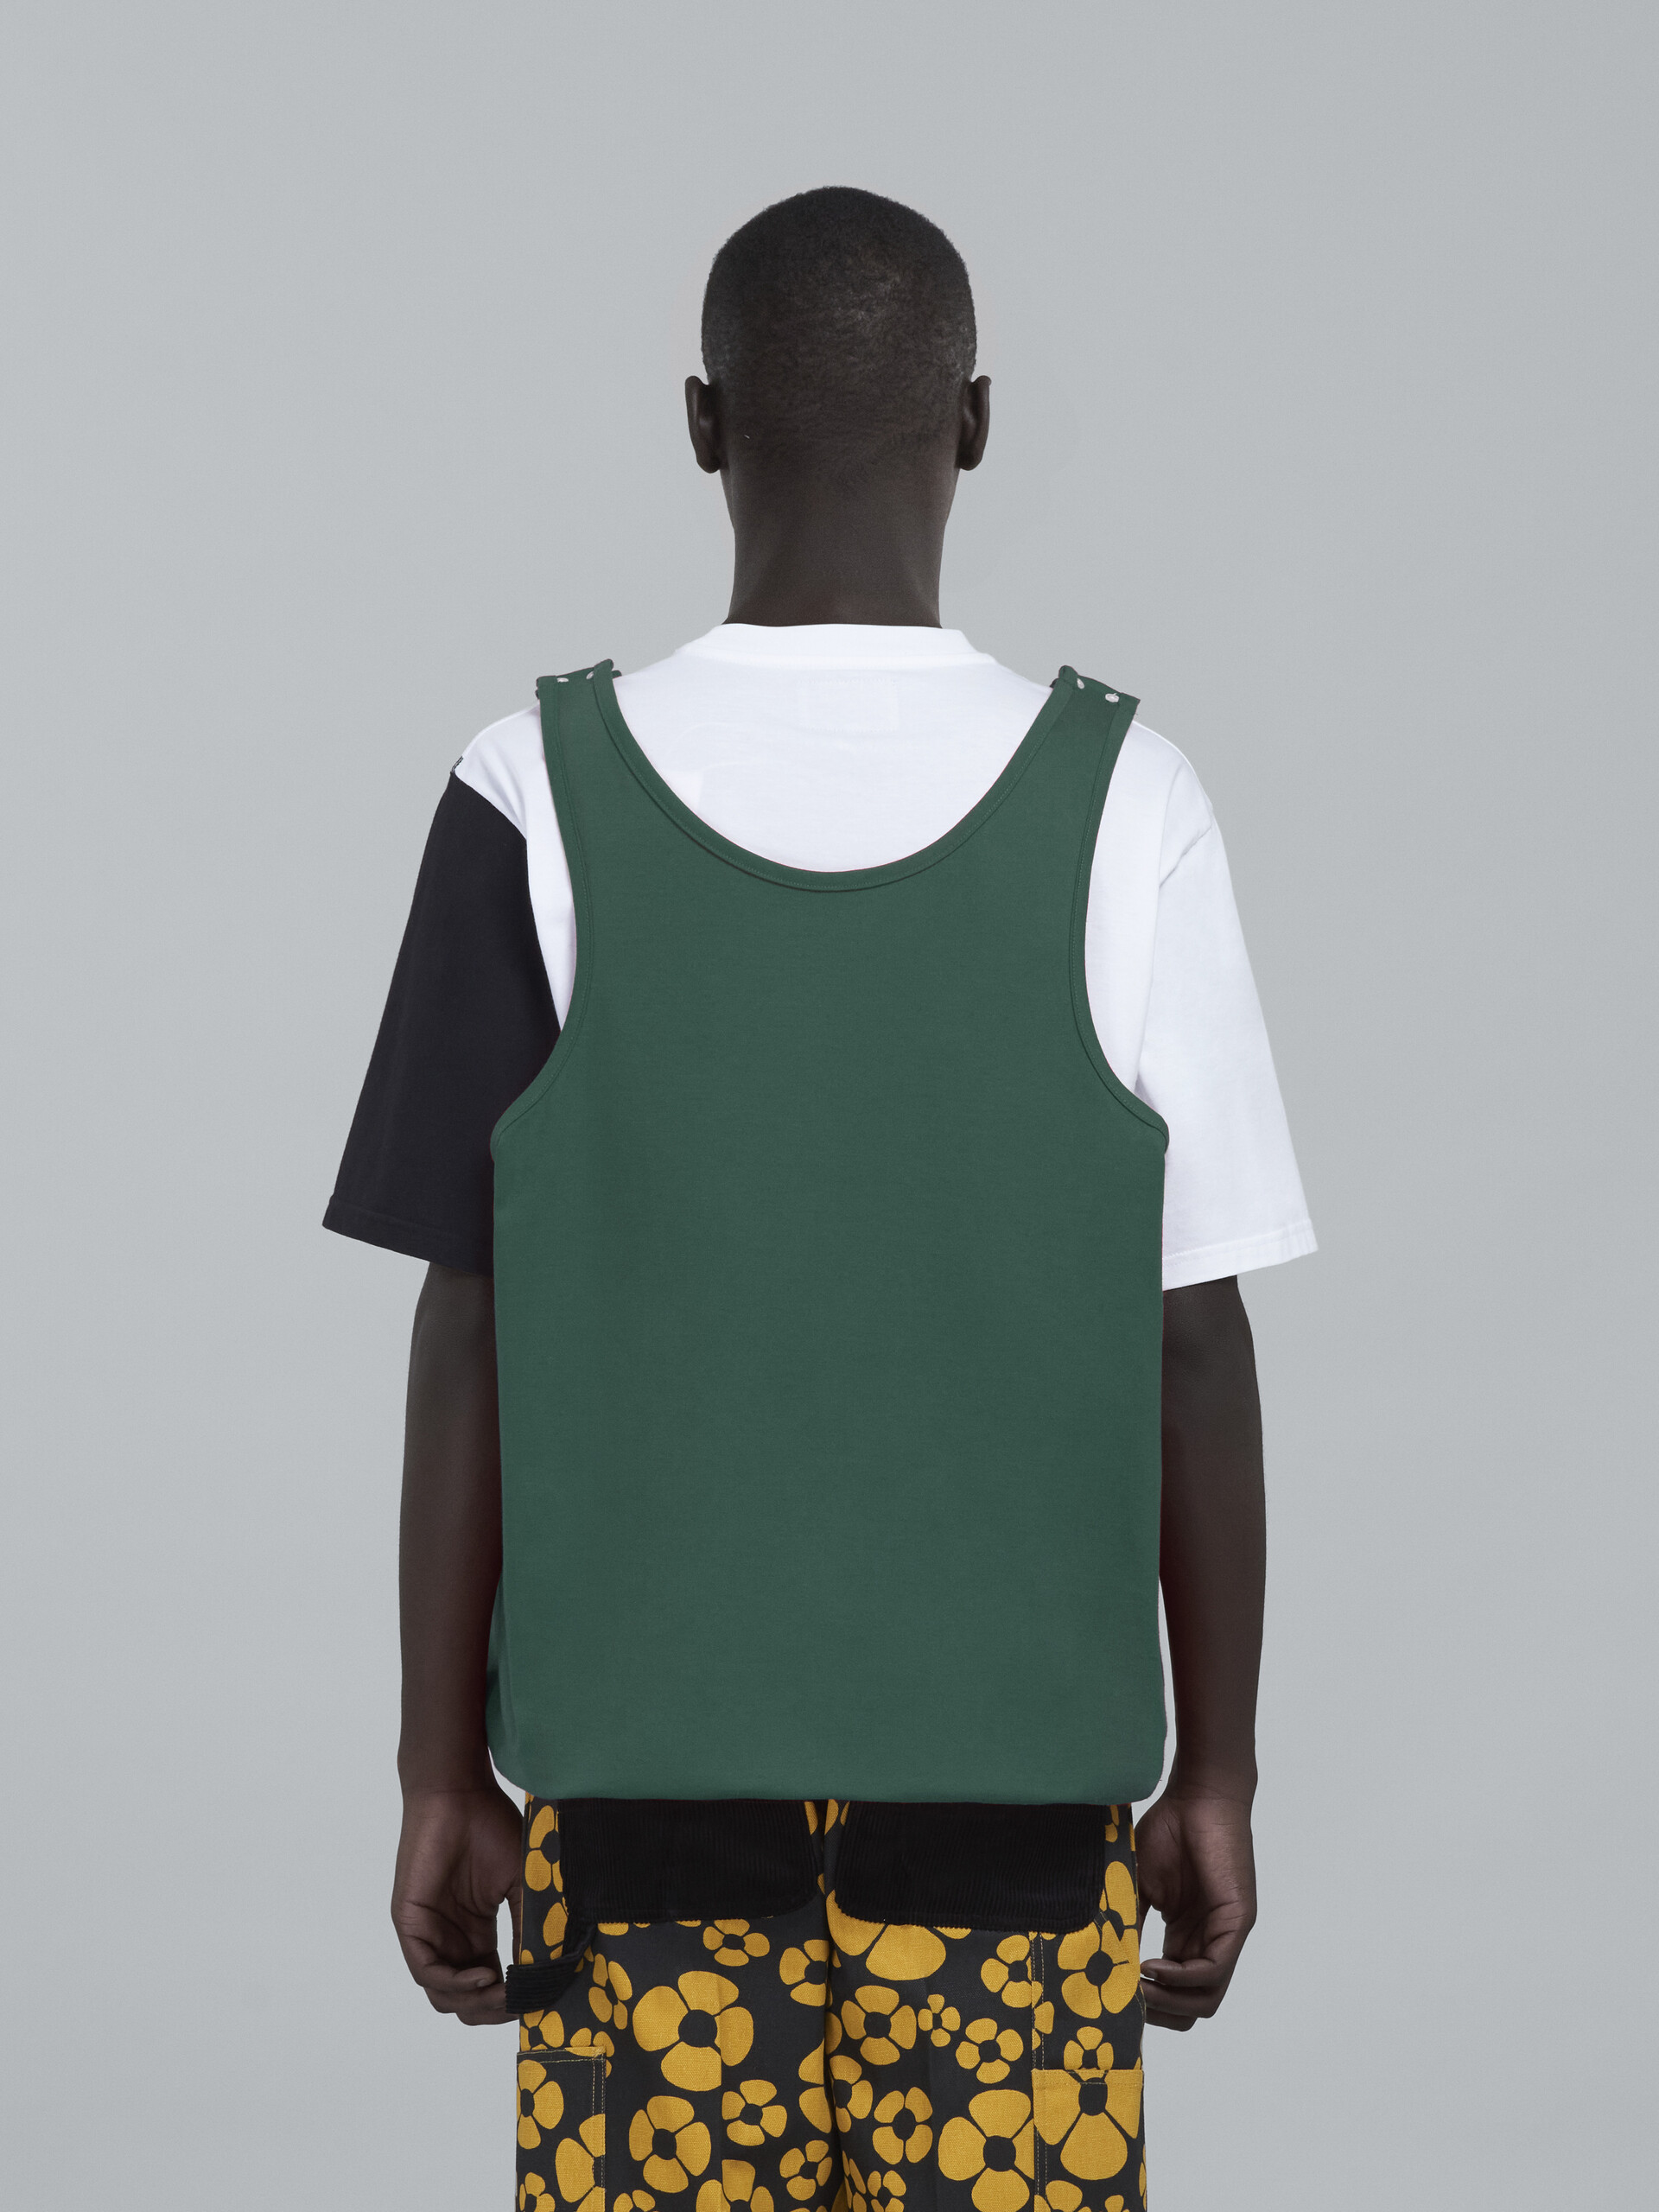 MARNI x CARHARTT WIP - T-shirt with green vest - T-shirts - Image 3